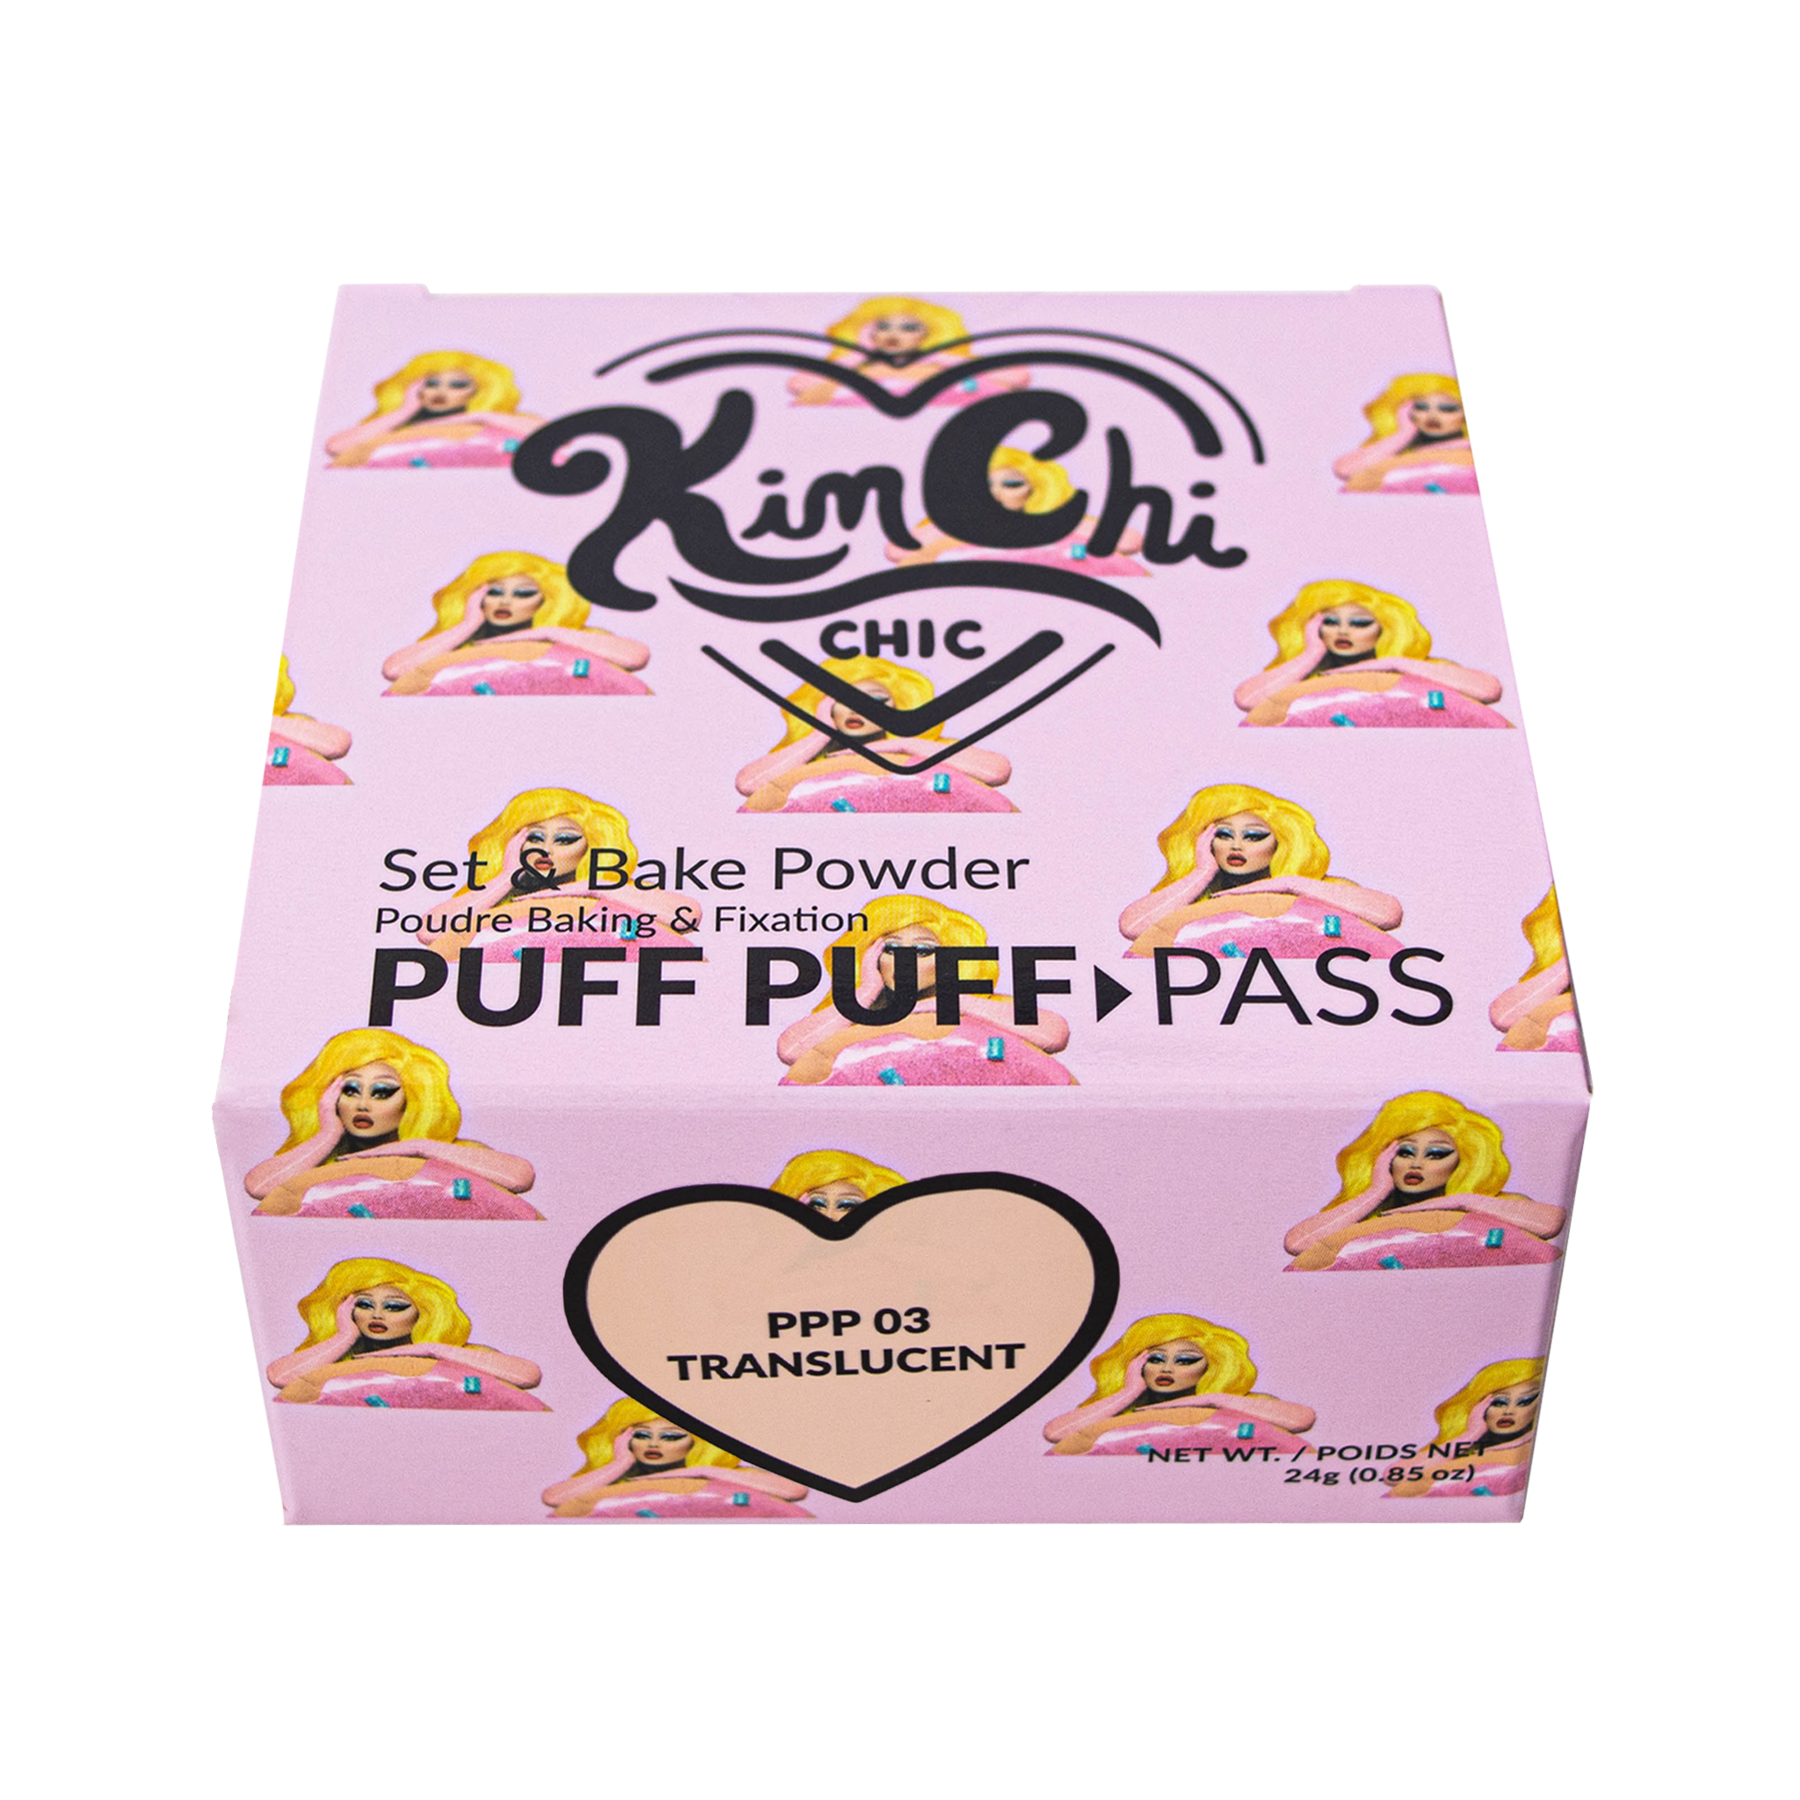 KimChi Chic - Puff Puff Pass Powder Translucent